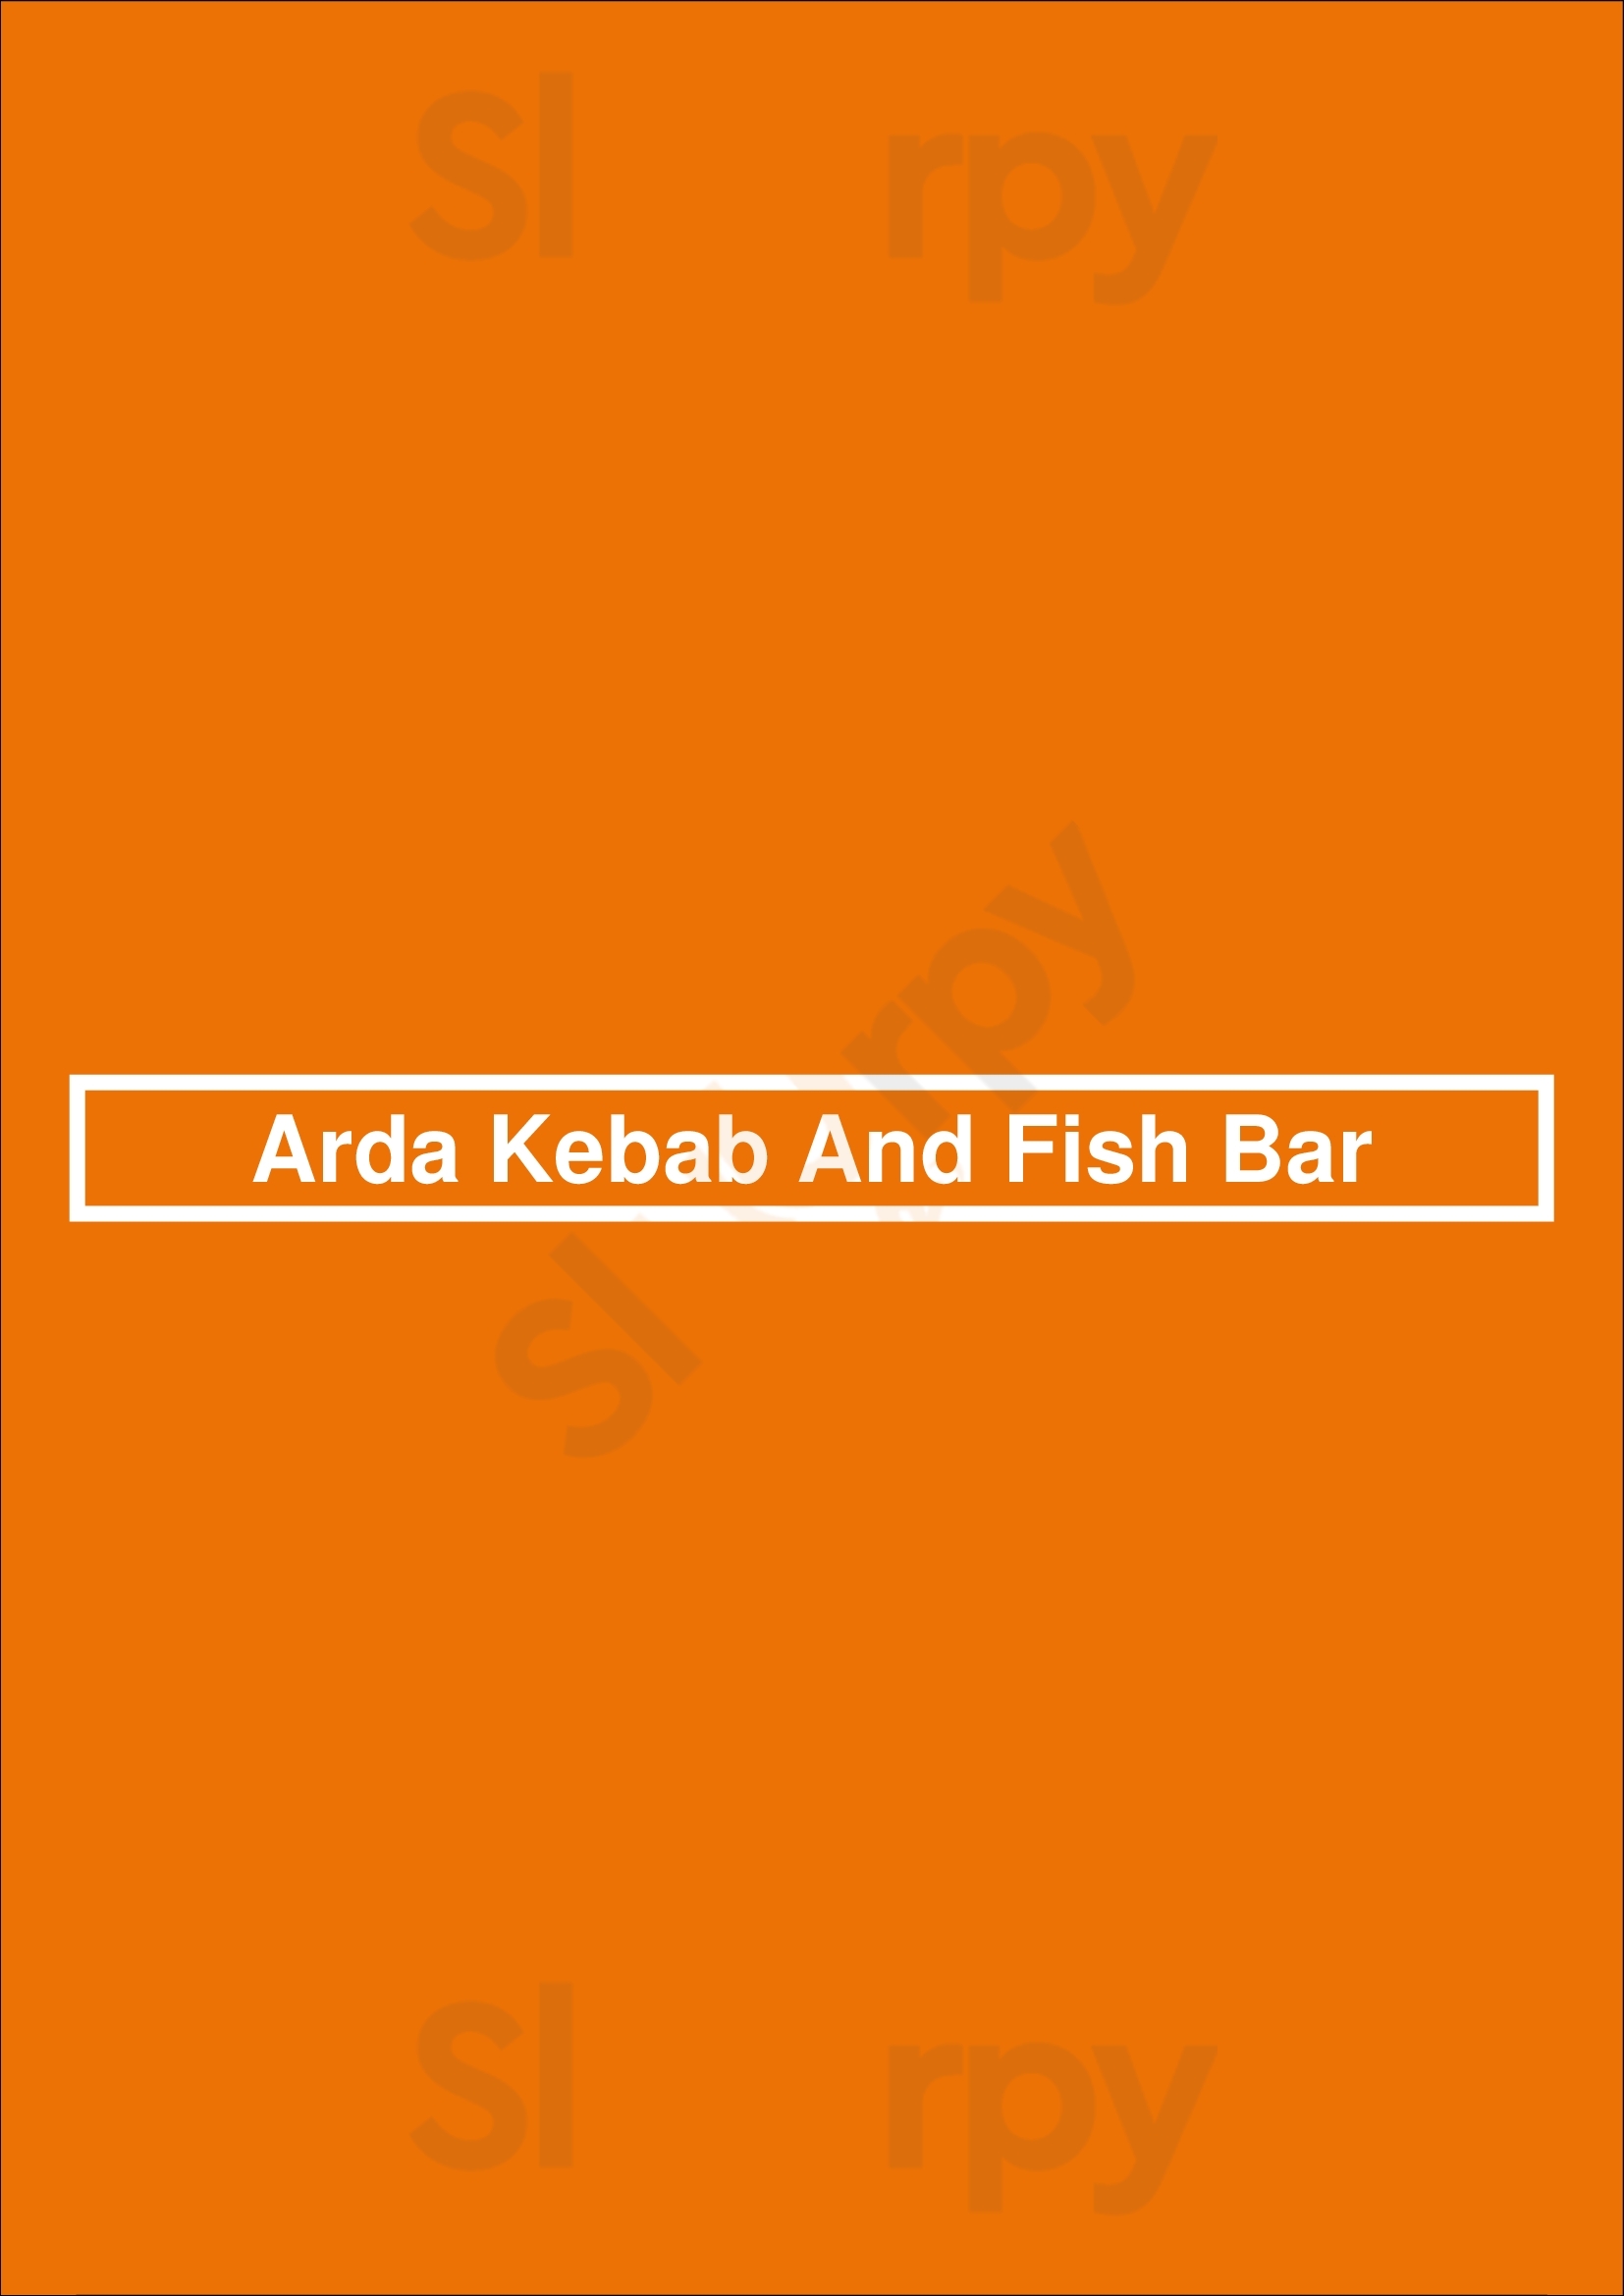 Arda Kebab And Fish Bar Maidstone Menu - 1